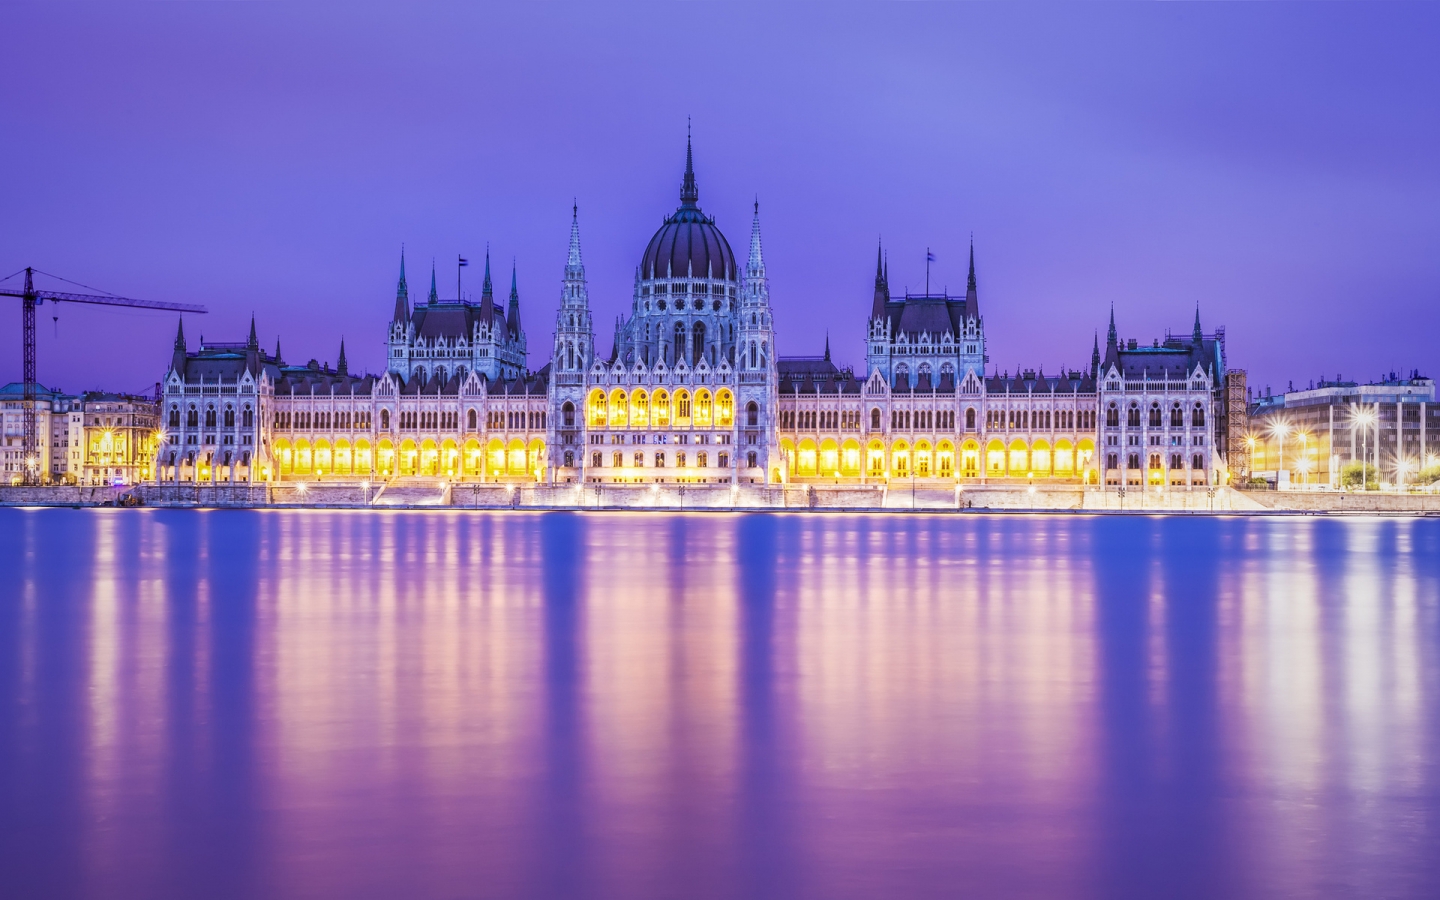 Budapest Parliament Building for 1440 x 900 widescreen resolution